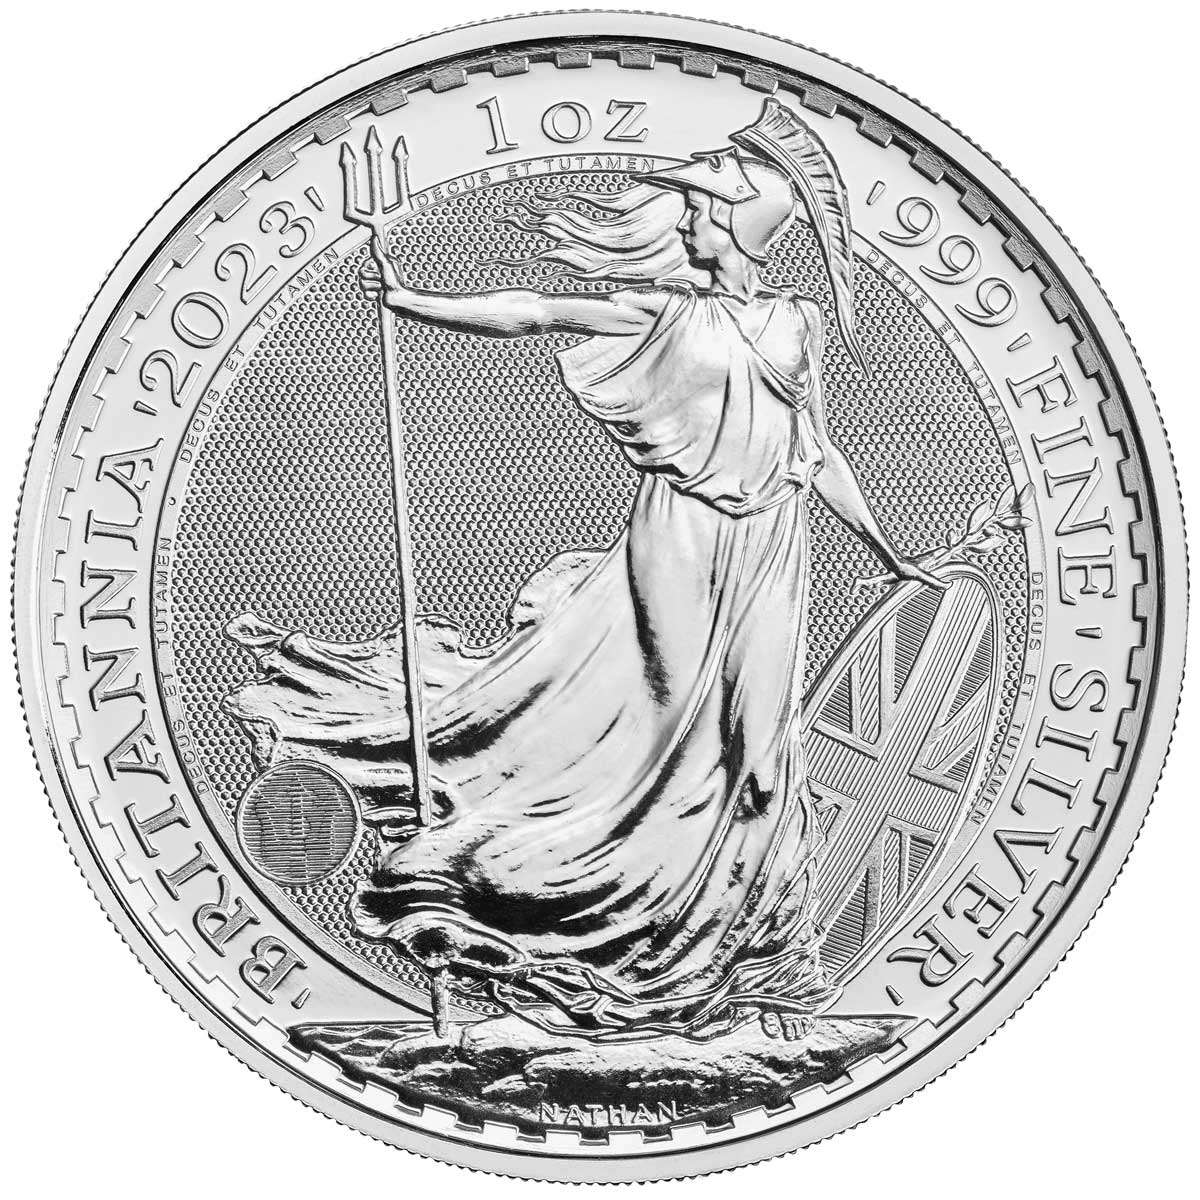 1 oz silver Britannia